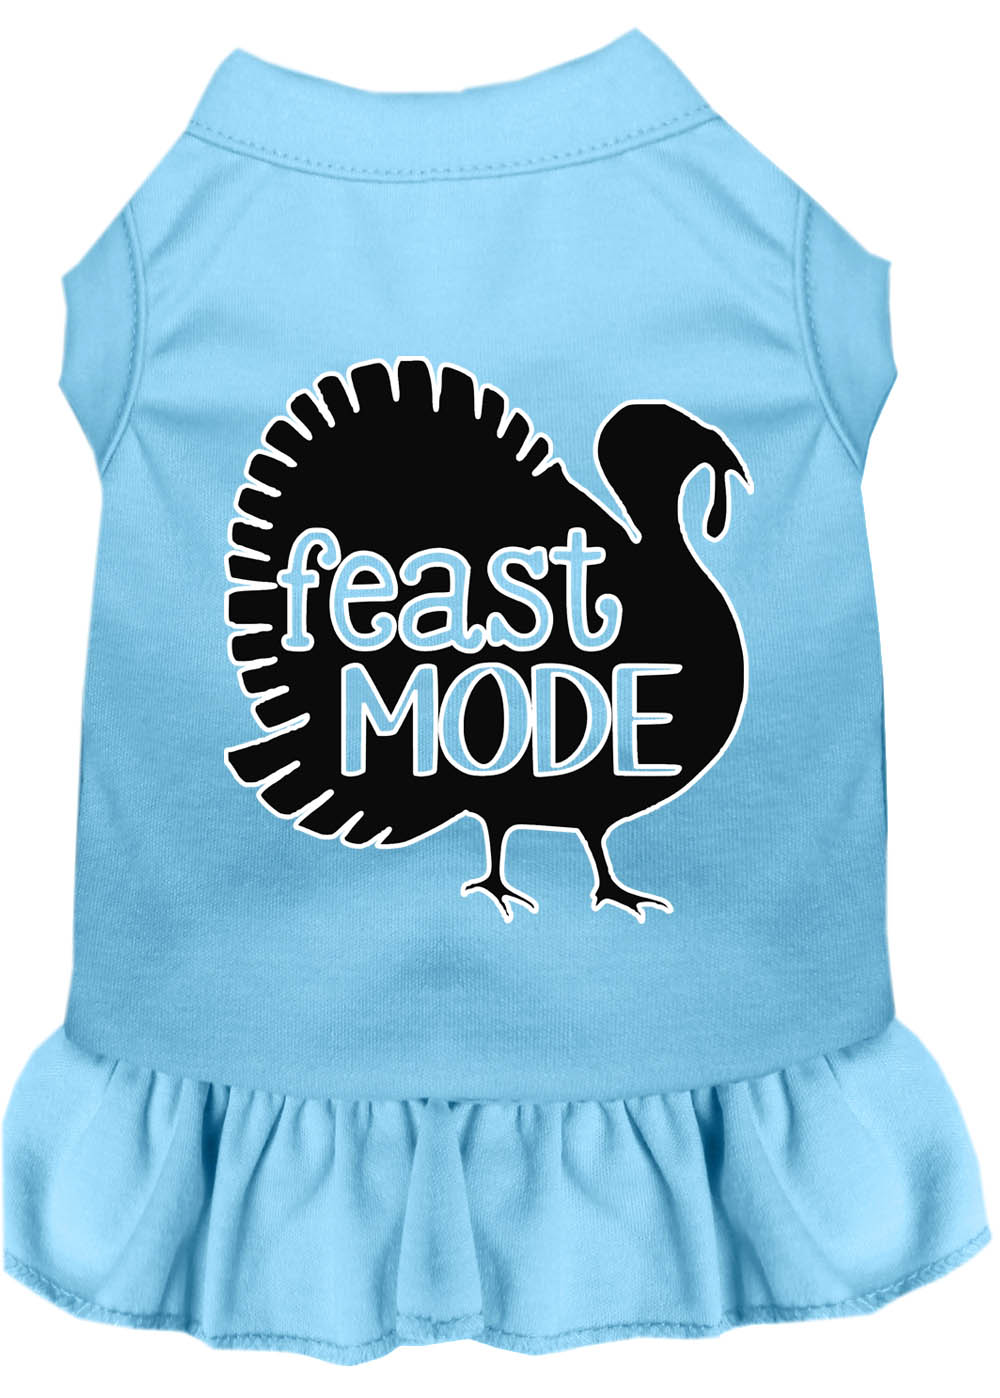 Feast Mode Screen Print Dog Dress Baby Blue 4X